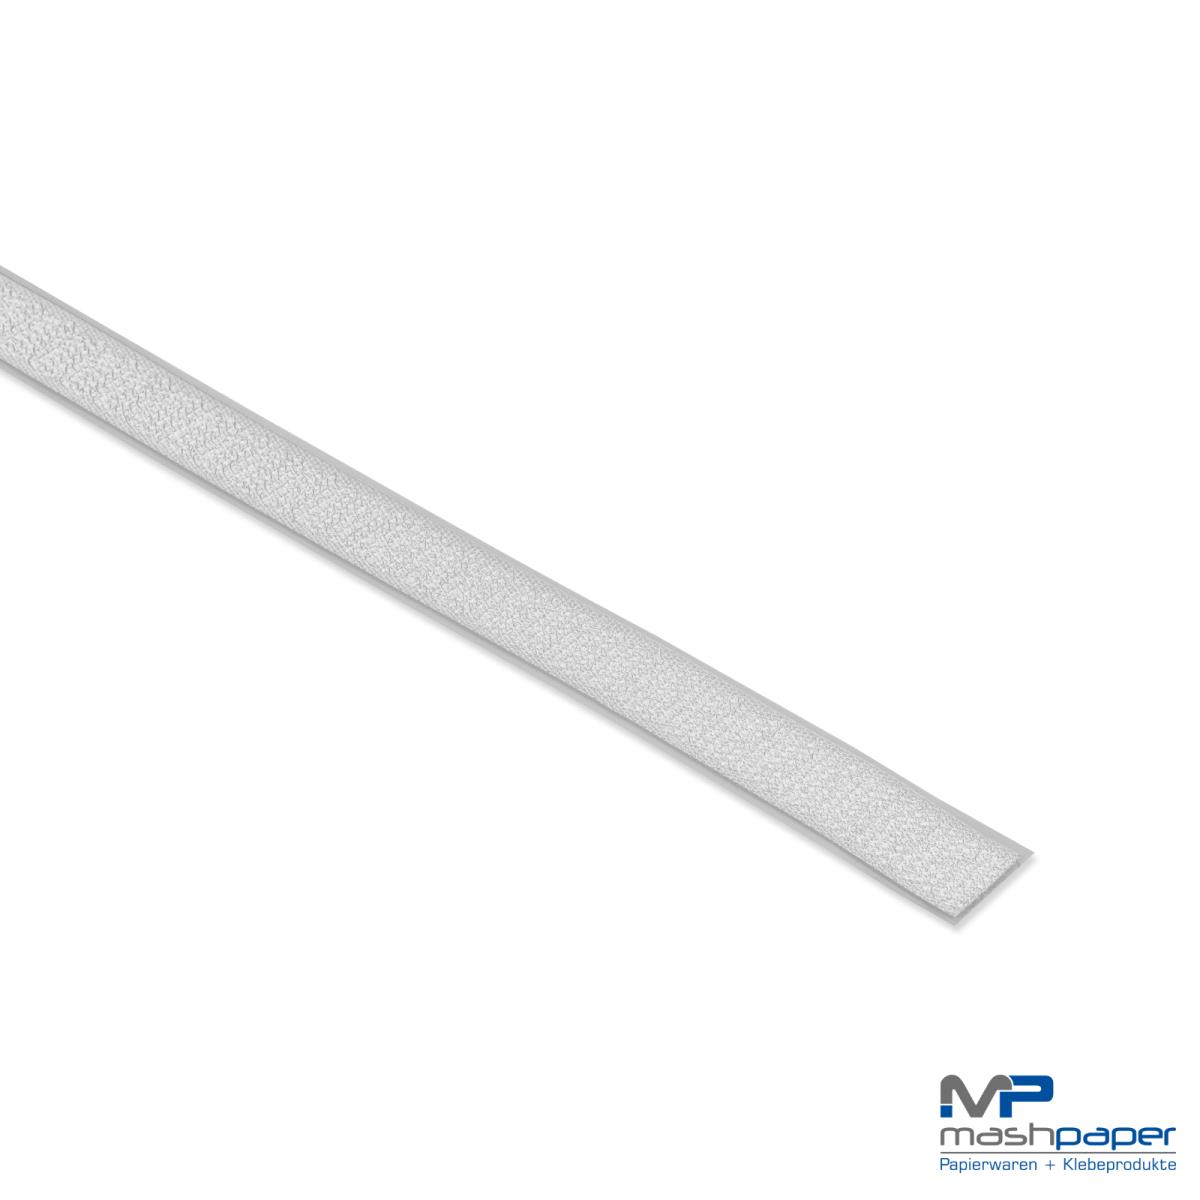 0,89€/m Hakenband Klettband 16mm weiß selbstklebend Hotmelt 25m 807016 